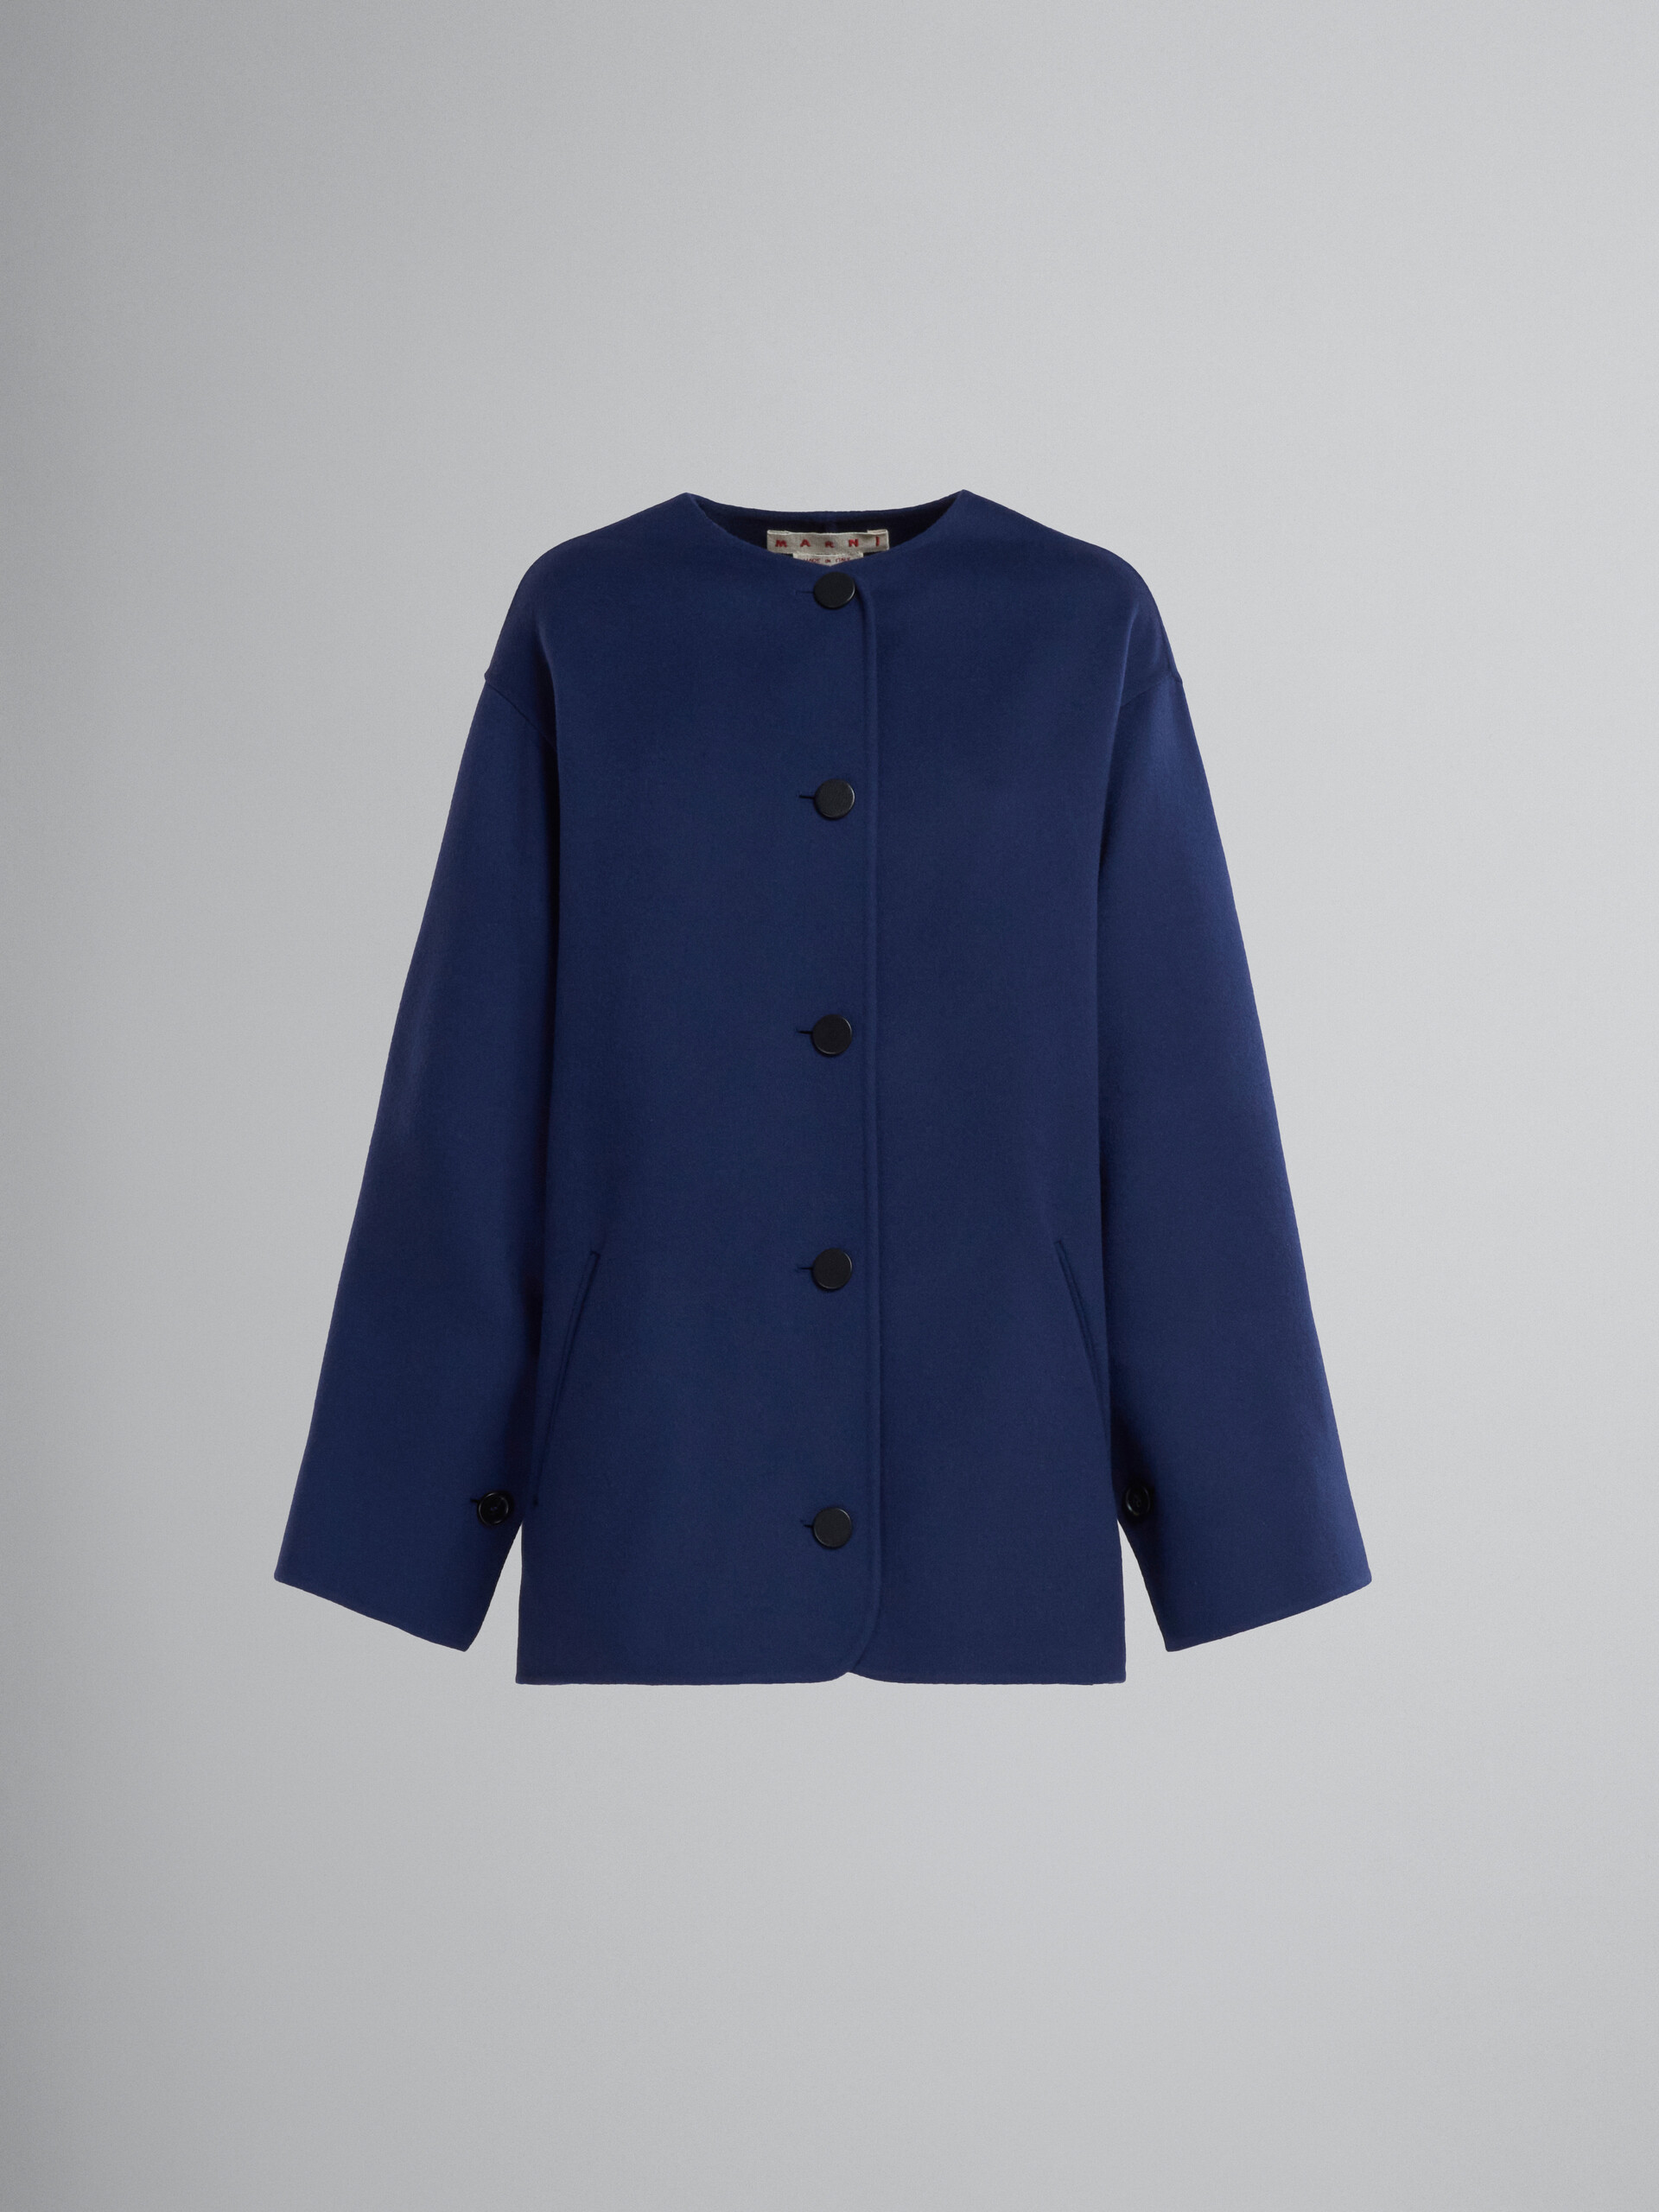 Blue wool peacoat - Jackets - Image 1